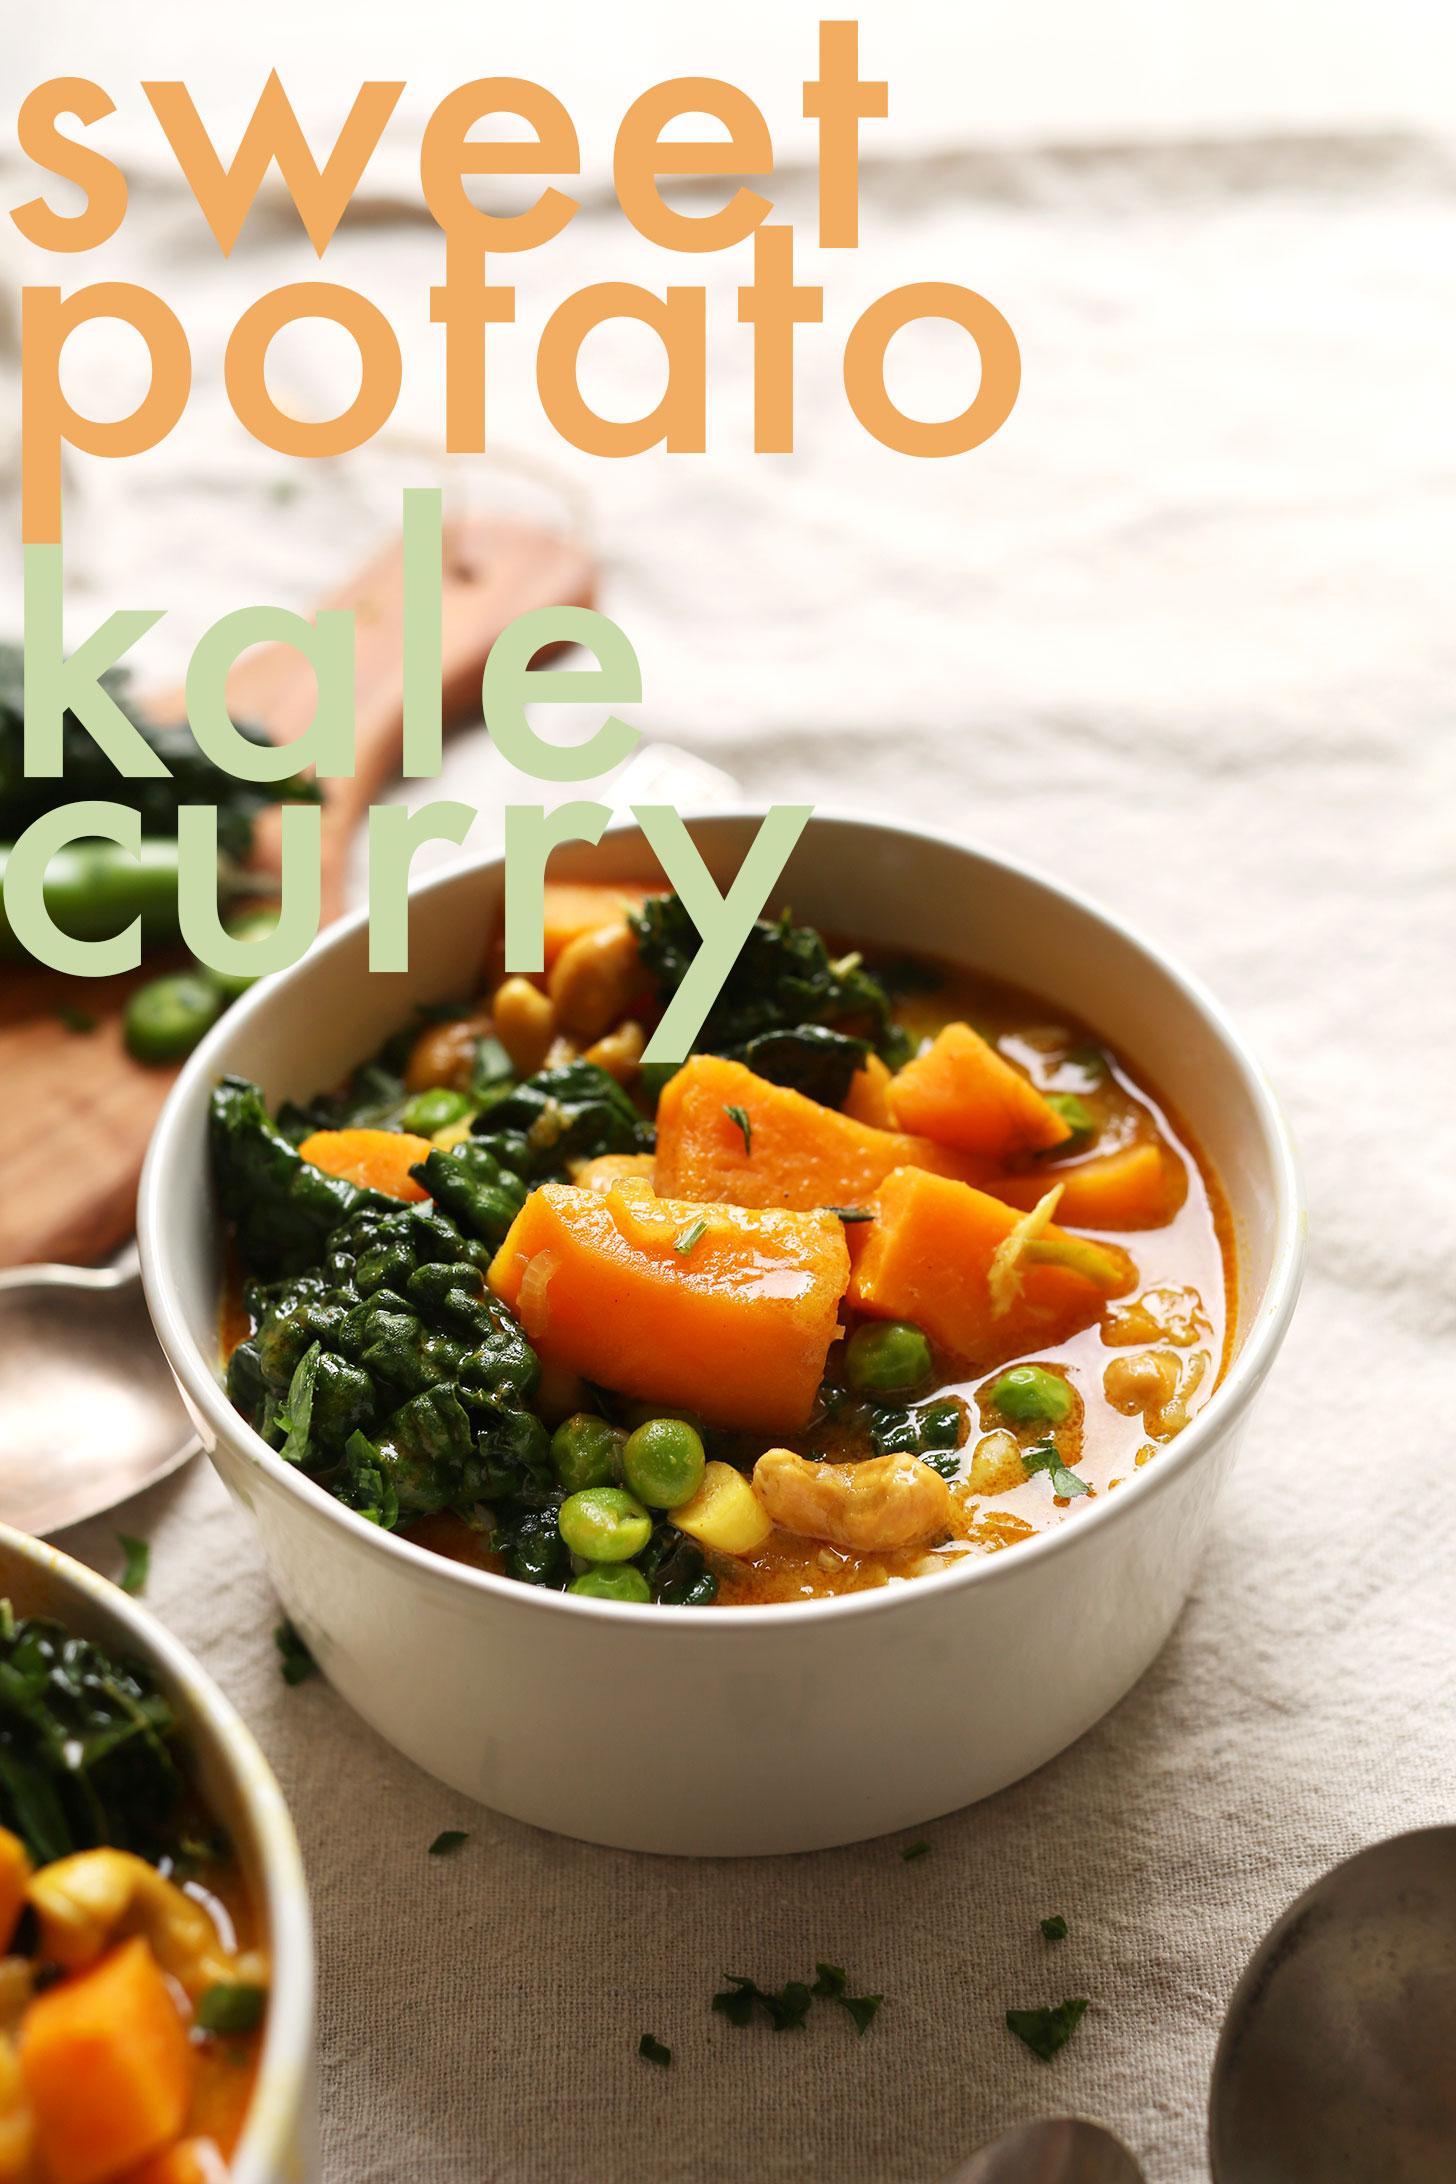 Perfect-sweet-potato-kale-curry-1-pot-so-easy-protein-rich-vegan-glutenfree-easy-dinner-curry-autumn